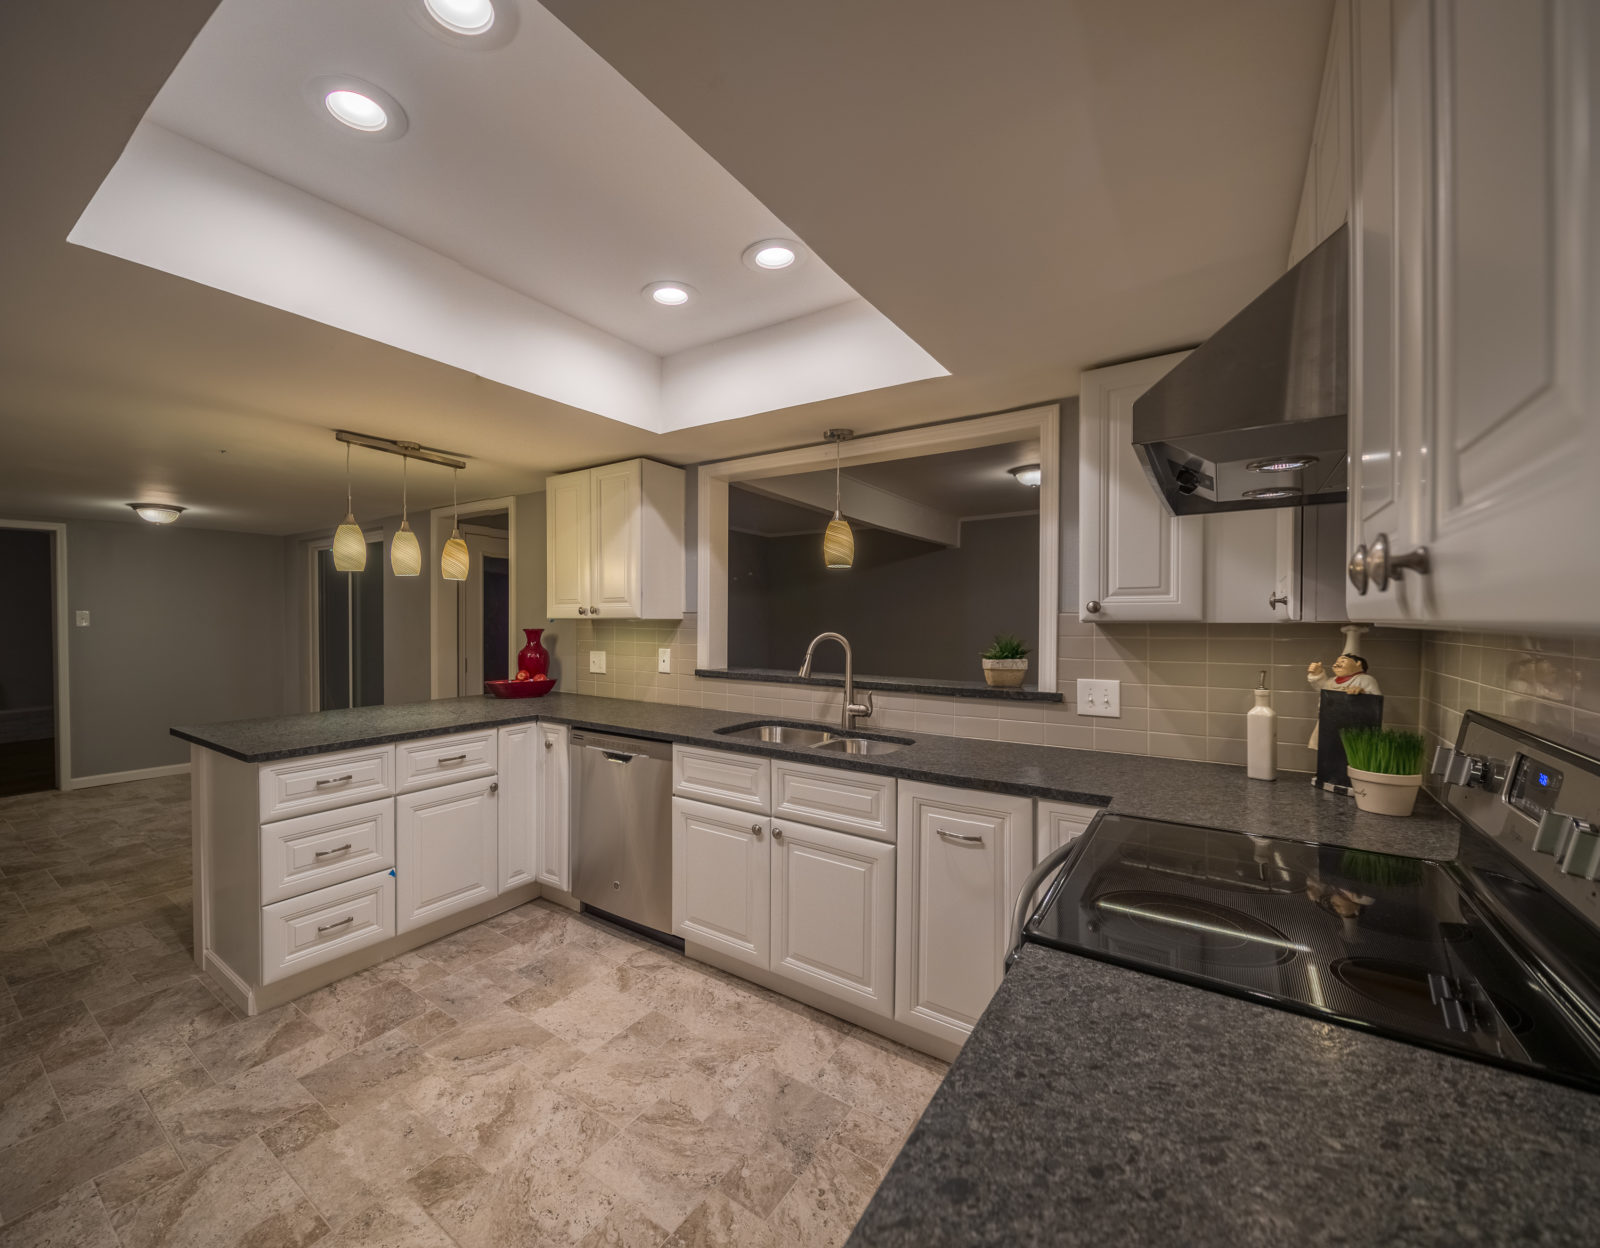 Complete-Modern-Kitchen-Redesign-White-Painted-Cabinets-Dark-Granite-Countertop